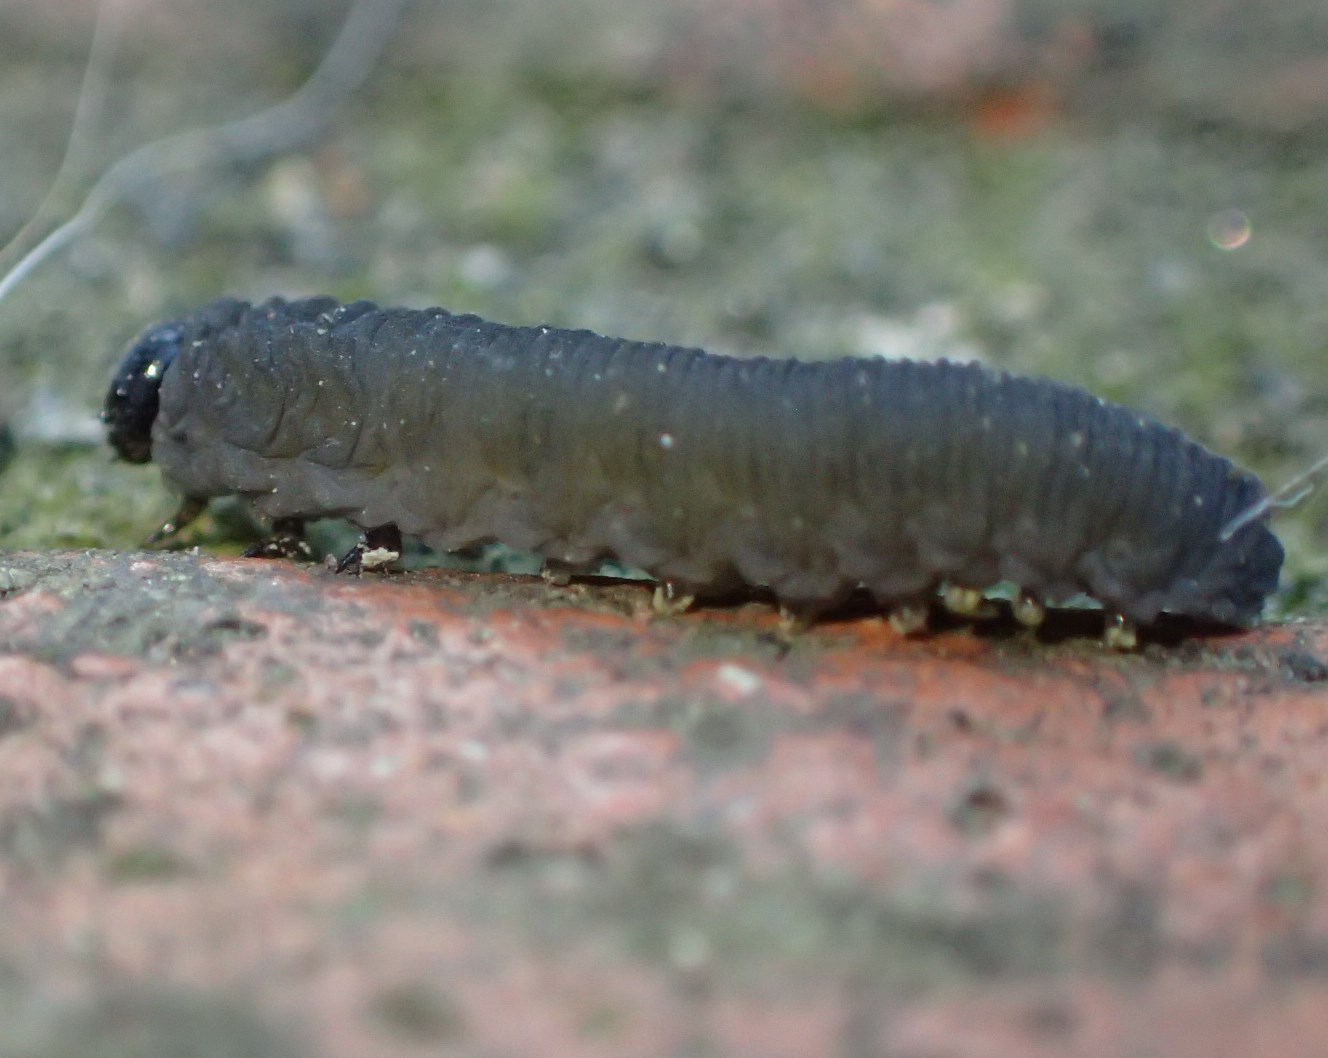 Bruchetti grigi:  larva di Tenthredinidae:  Athalia cornubiae